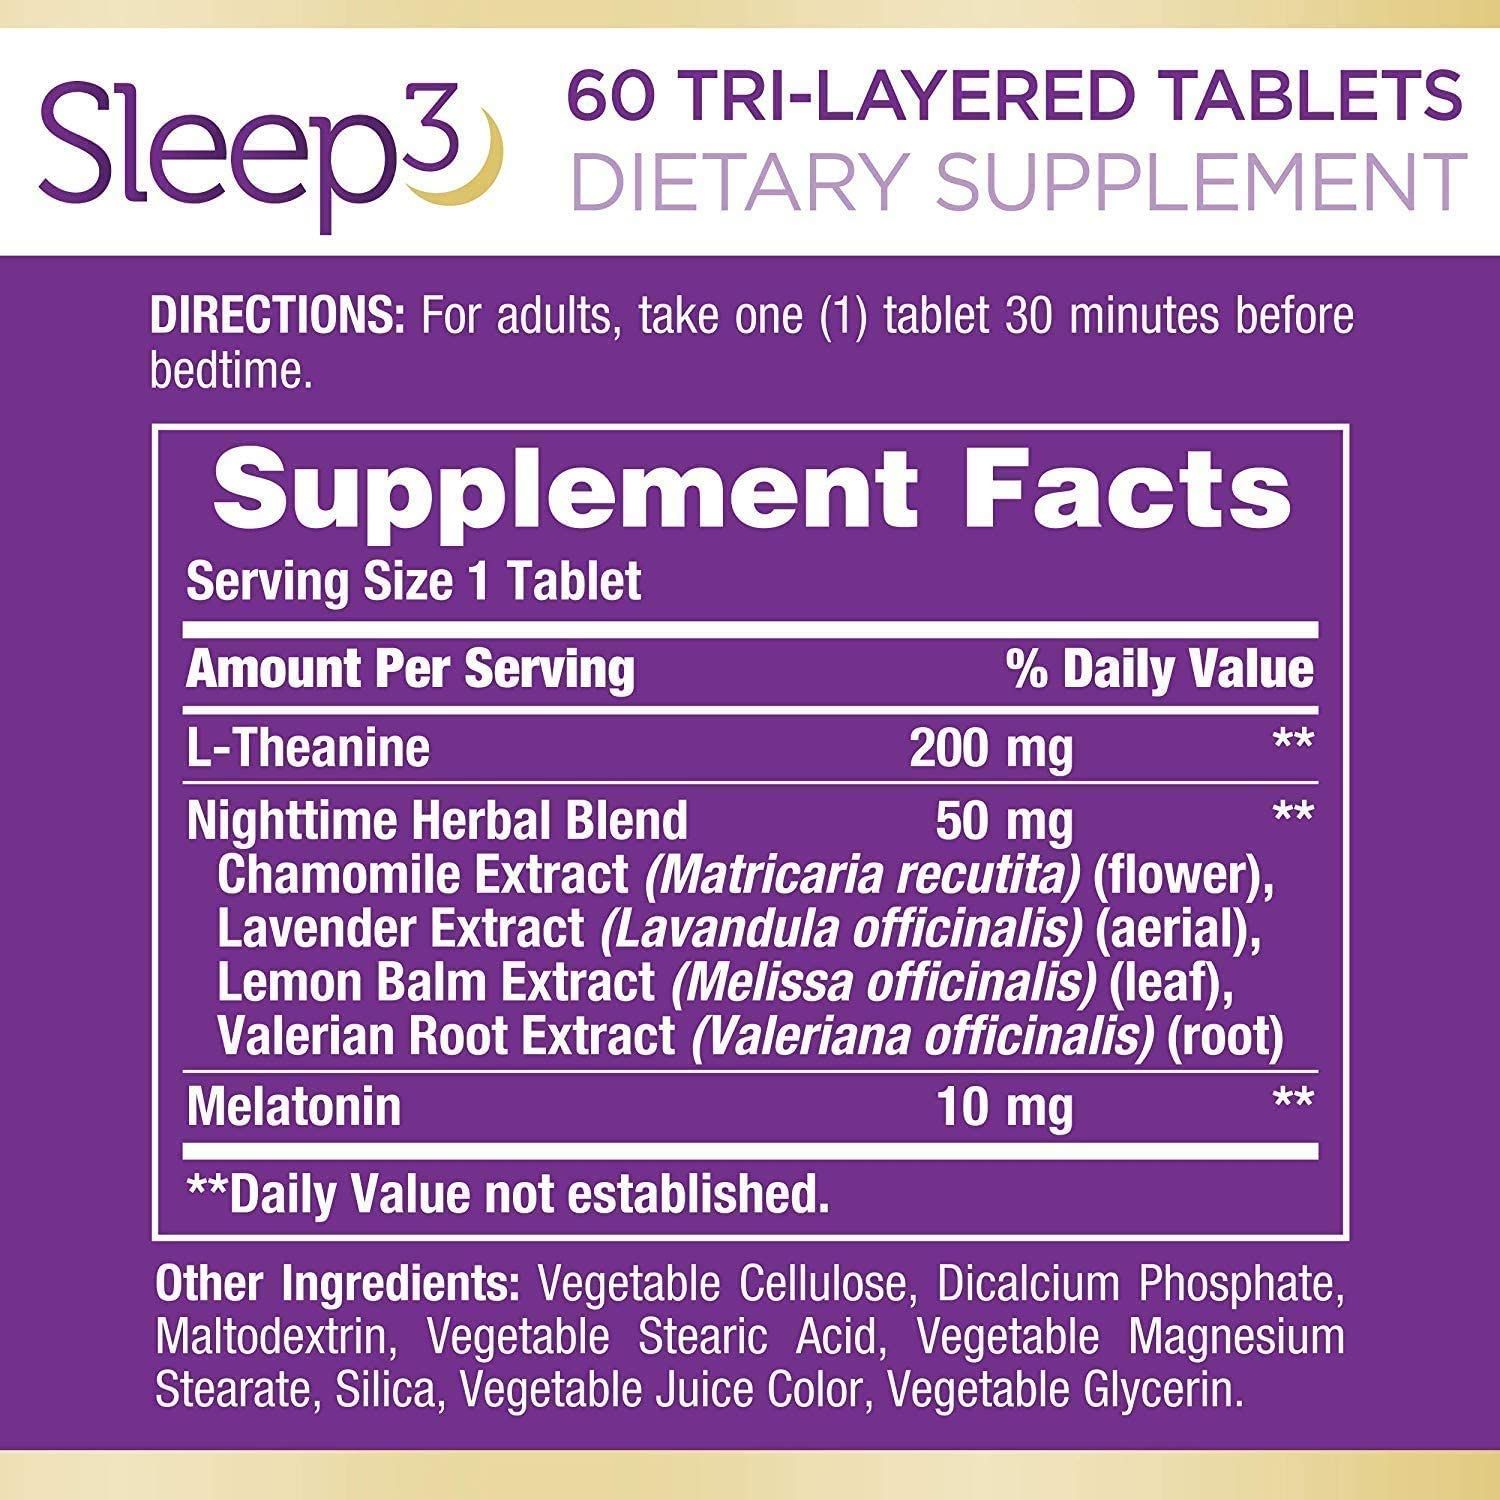 Nature's Bounty Sleep3 Tri-Layered Tablets - 30 ct